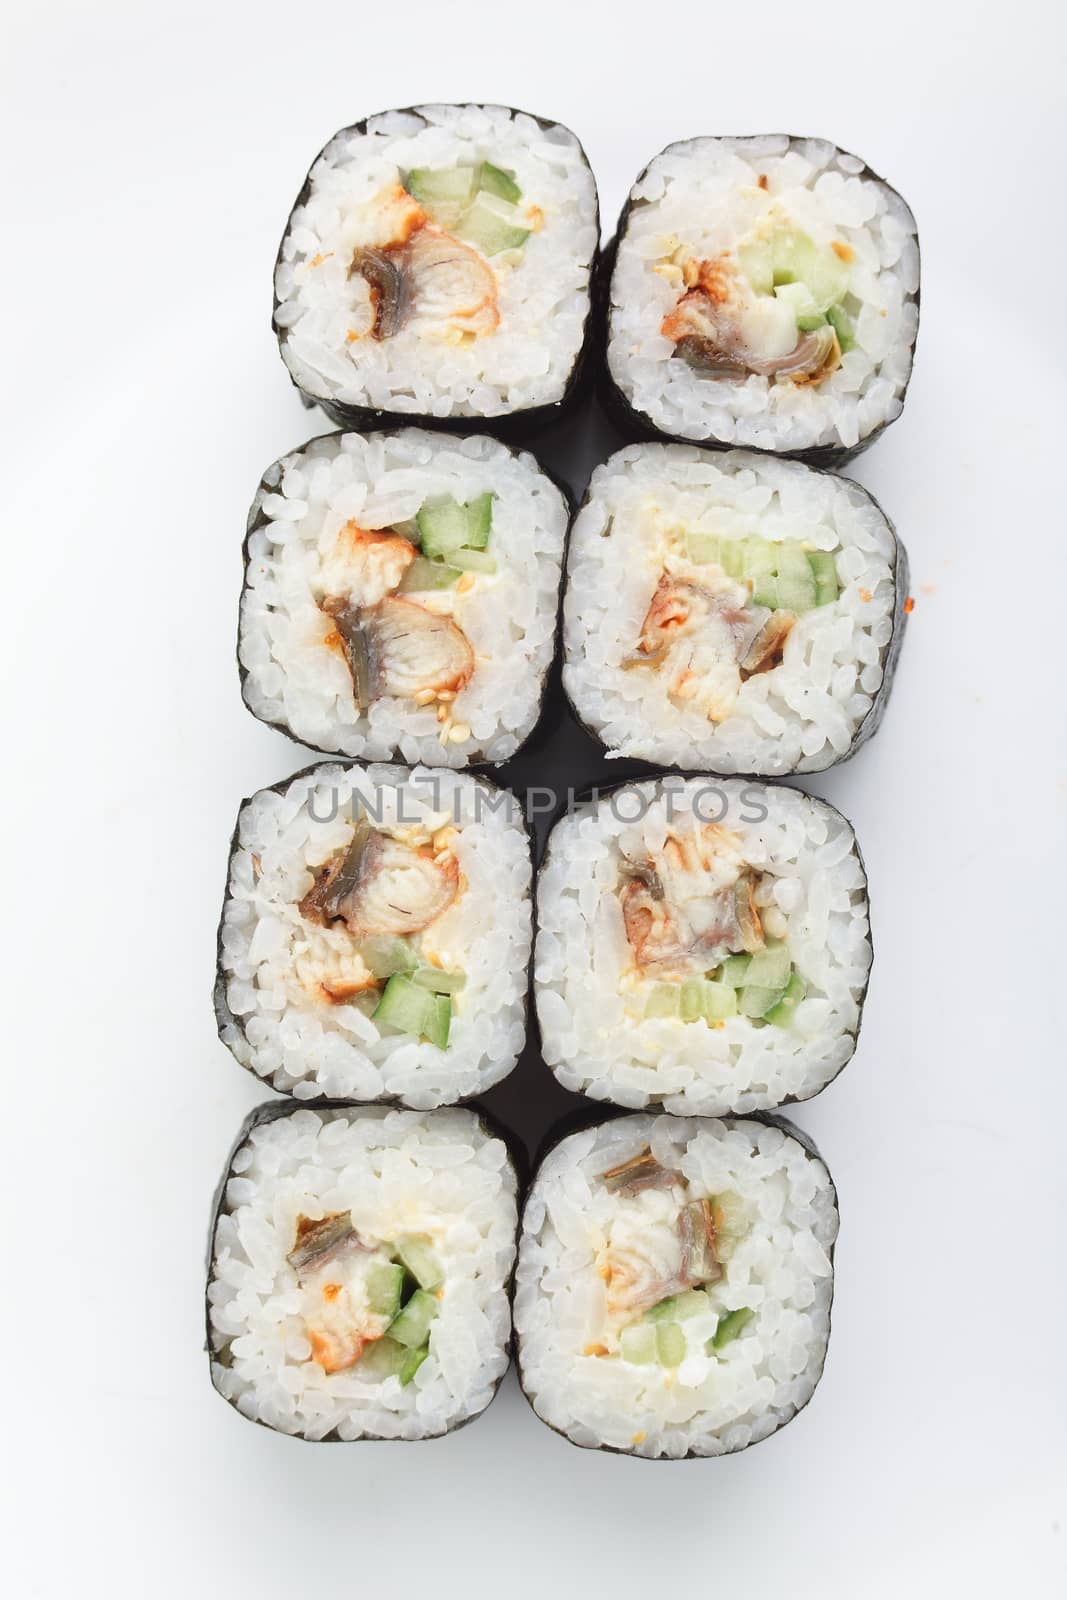 fresh sushi on white background by fiphoto